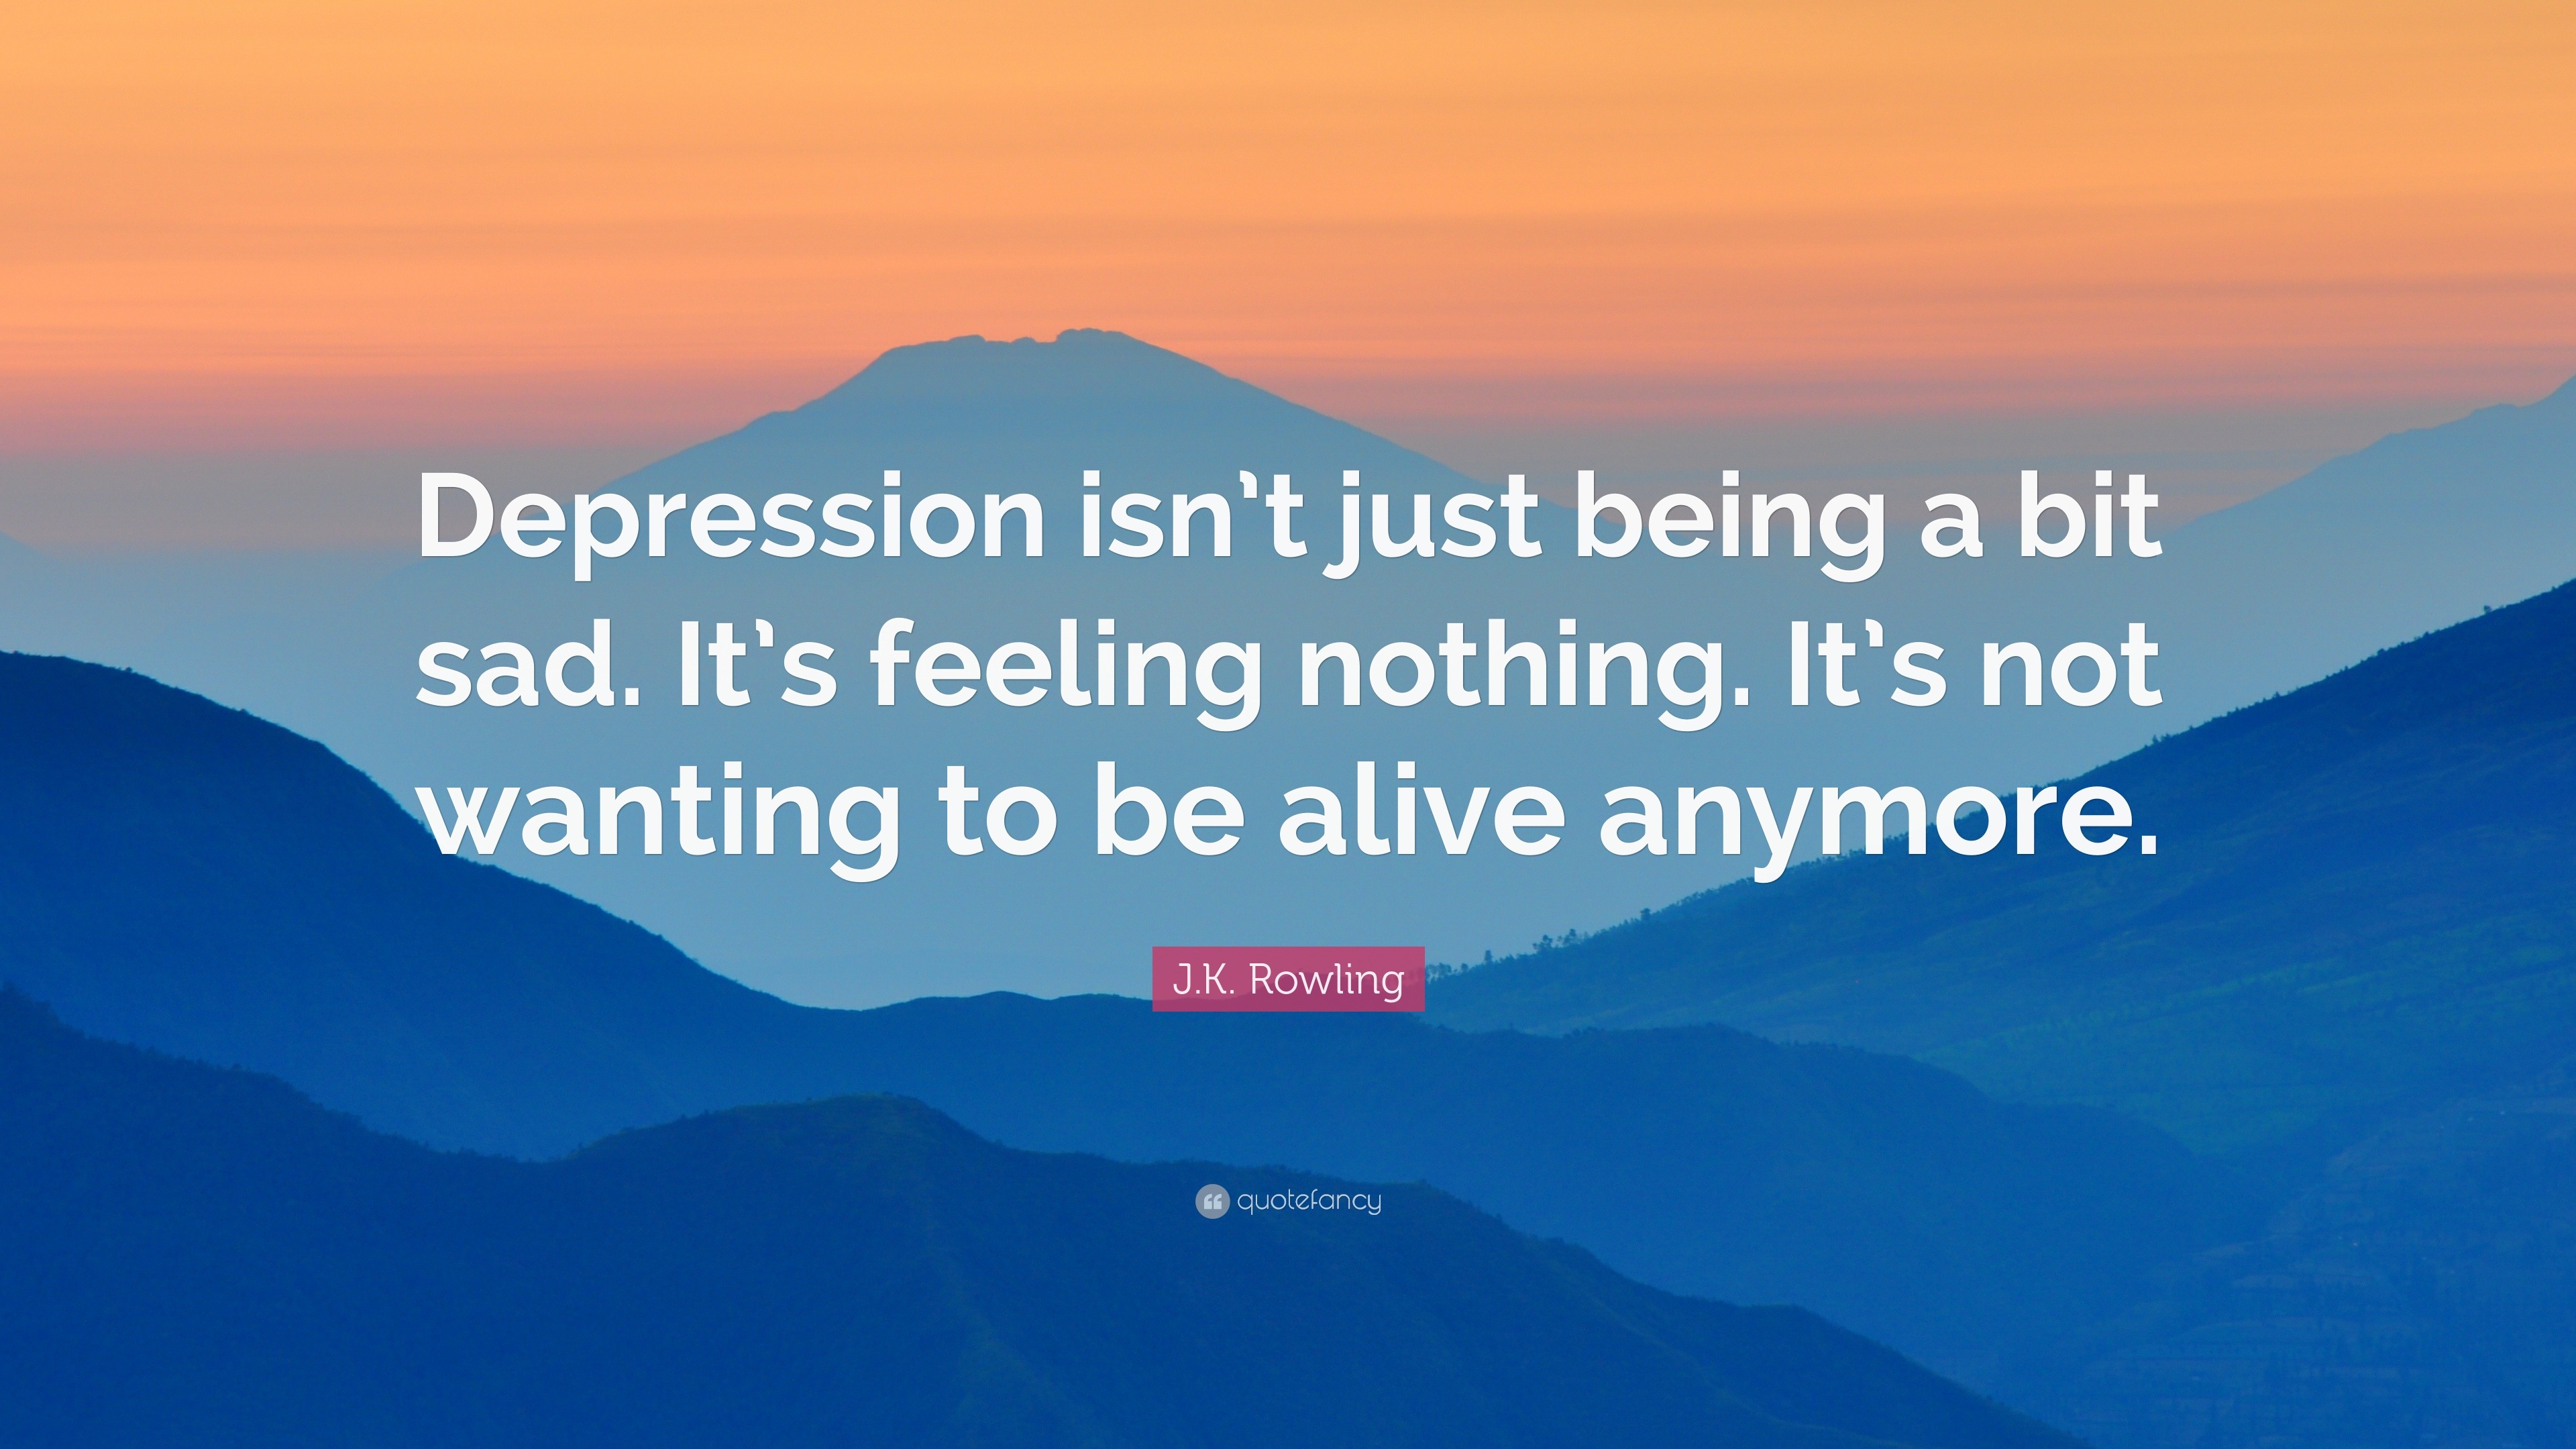 J.K. Rowling Quote: “Depression isn’t just being a bit sad. It’s ...